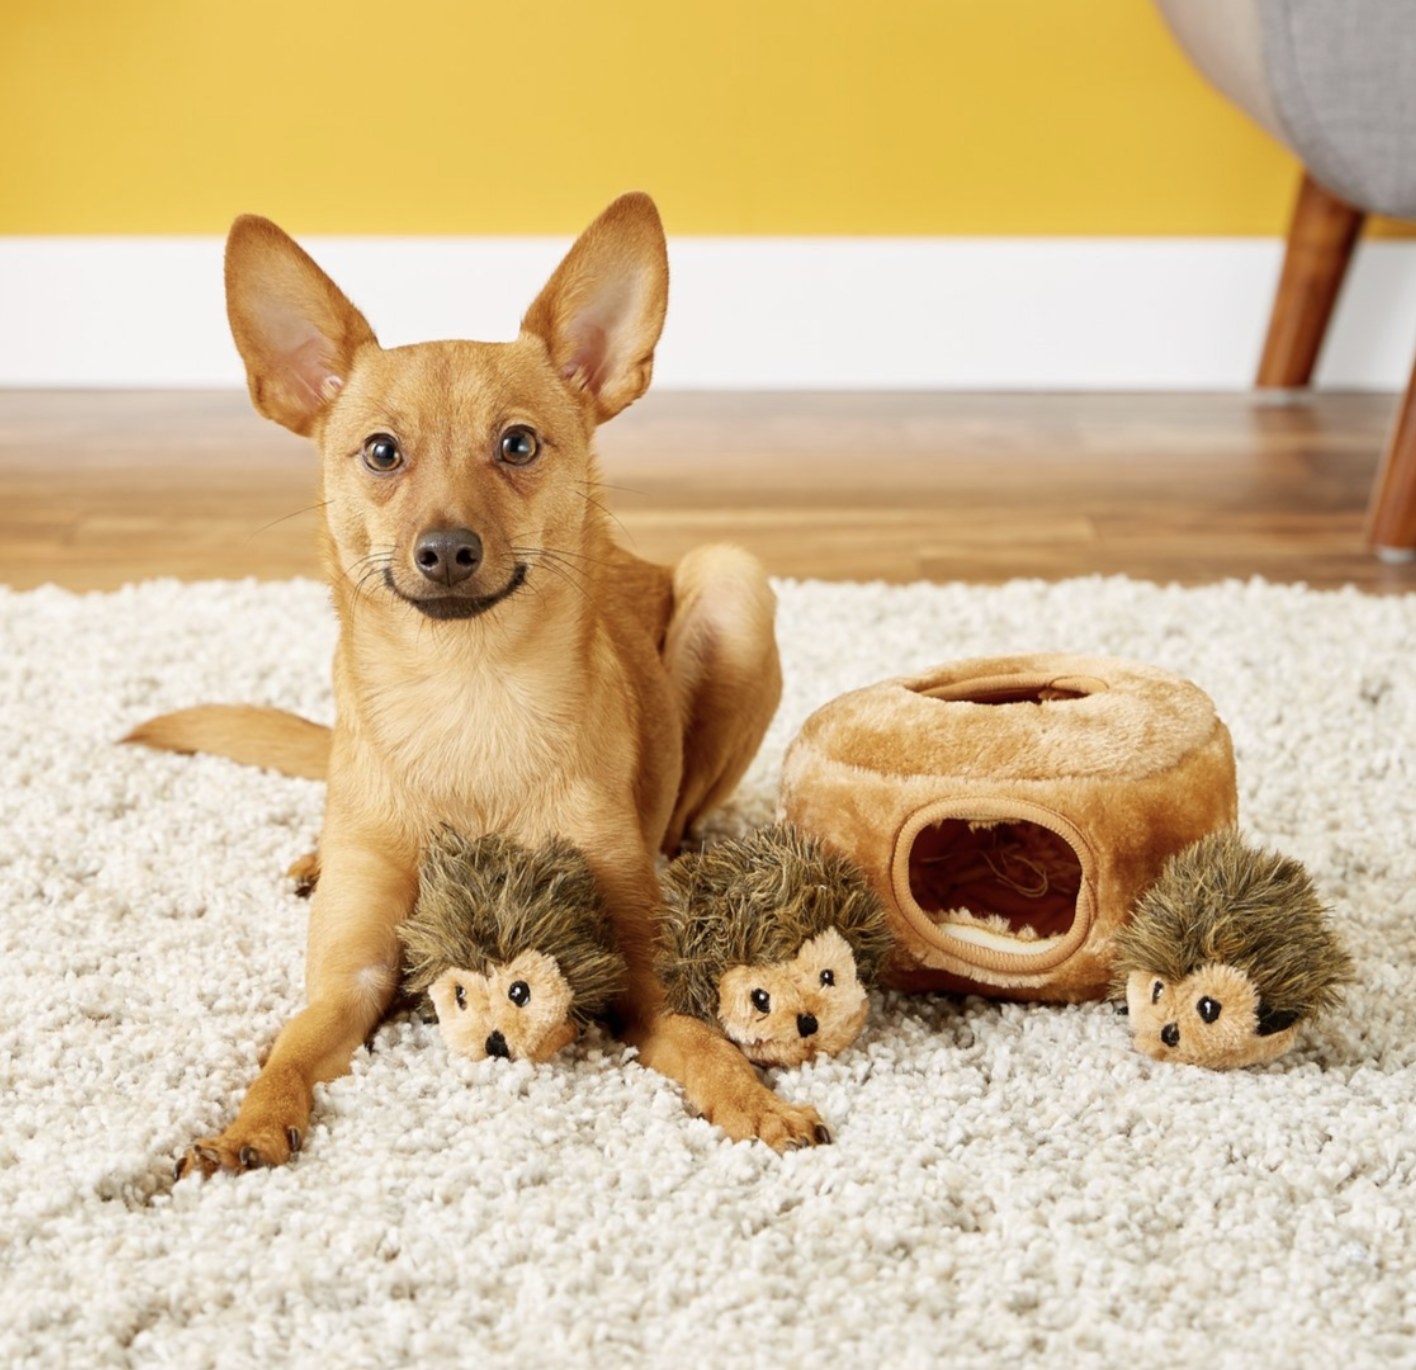 Dog enjoying the hedgehog hide-and-seek plush toy